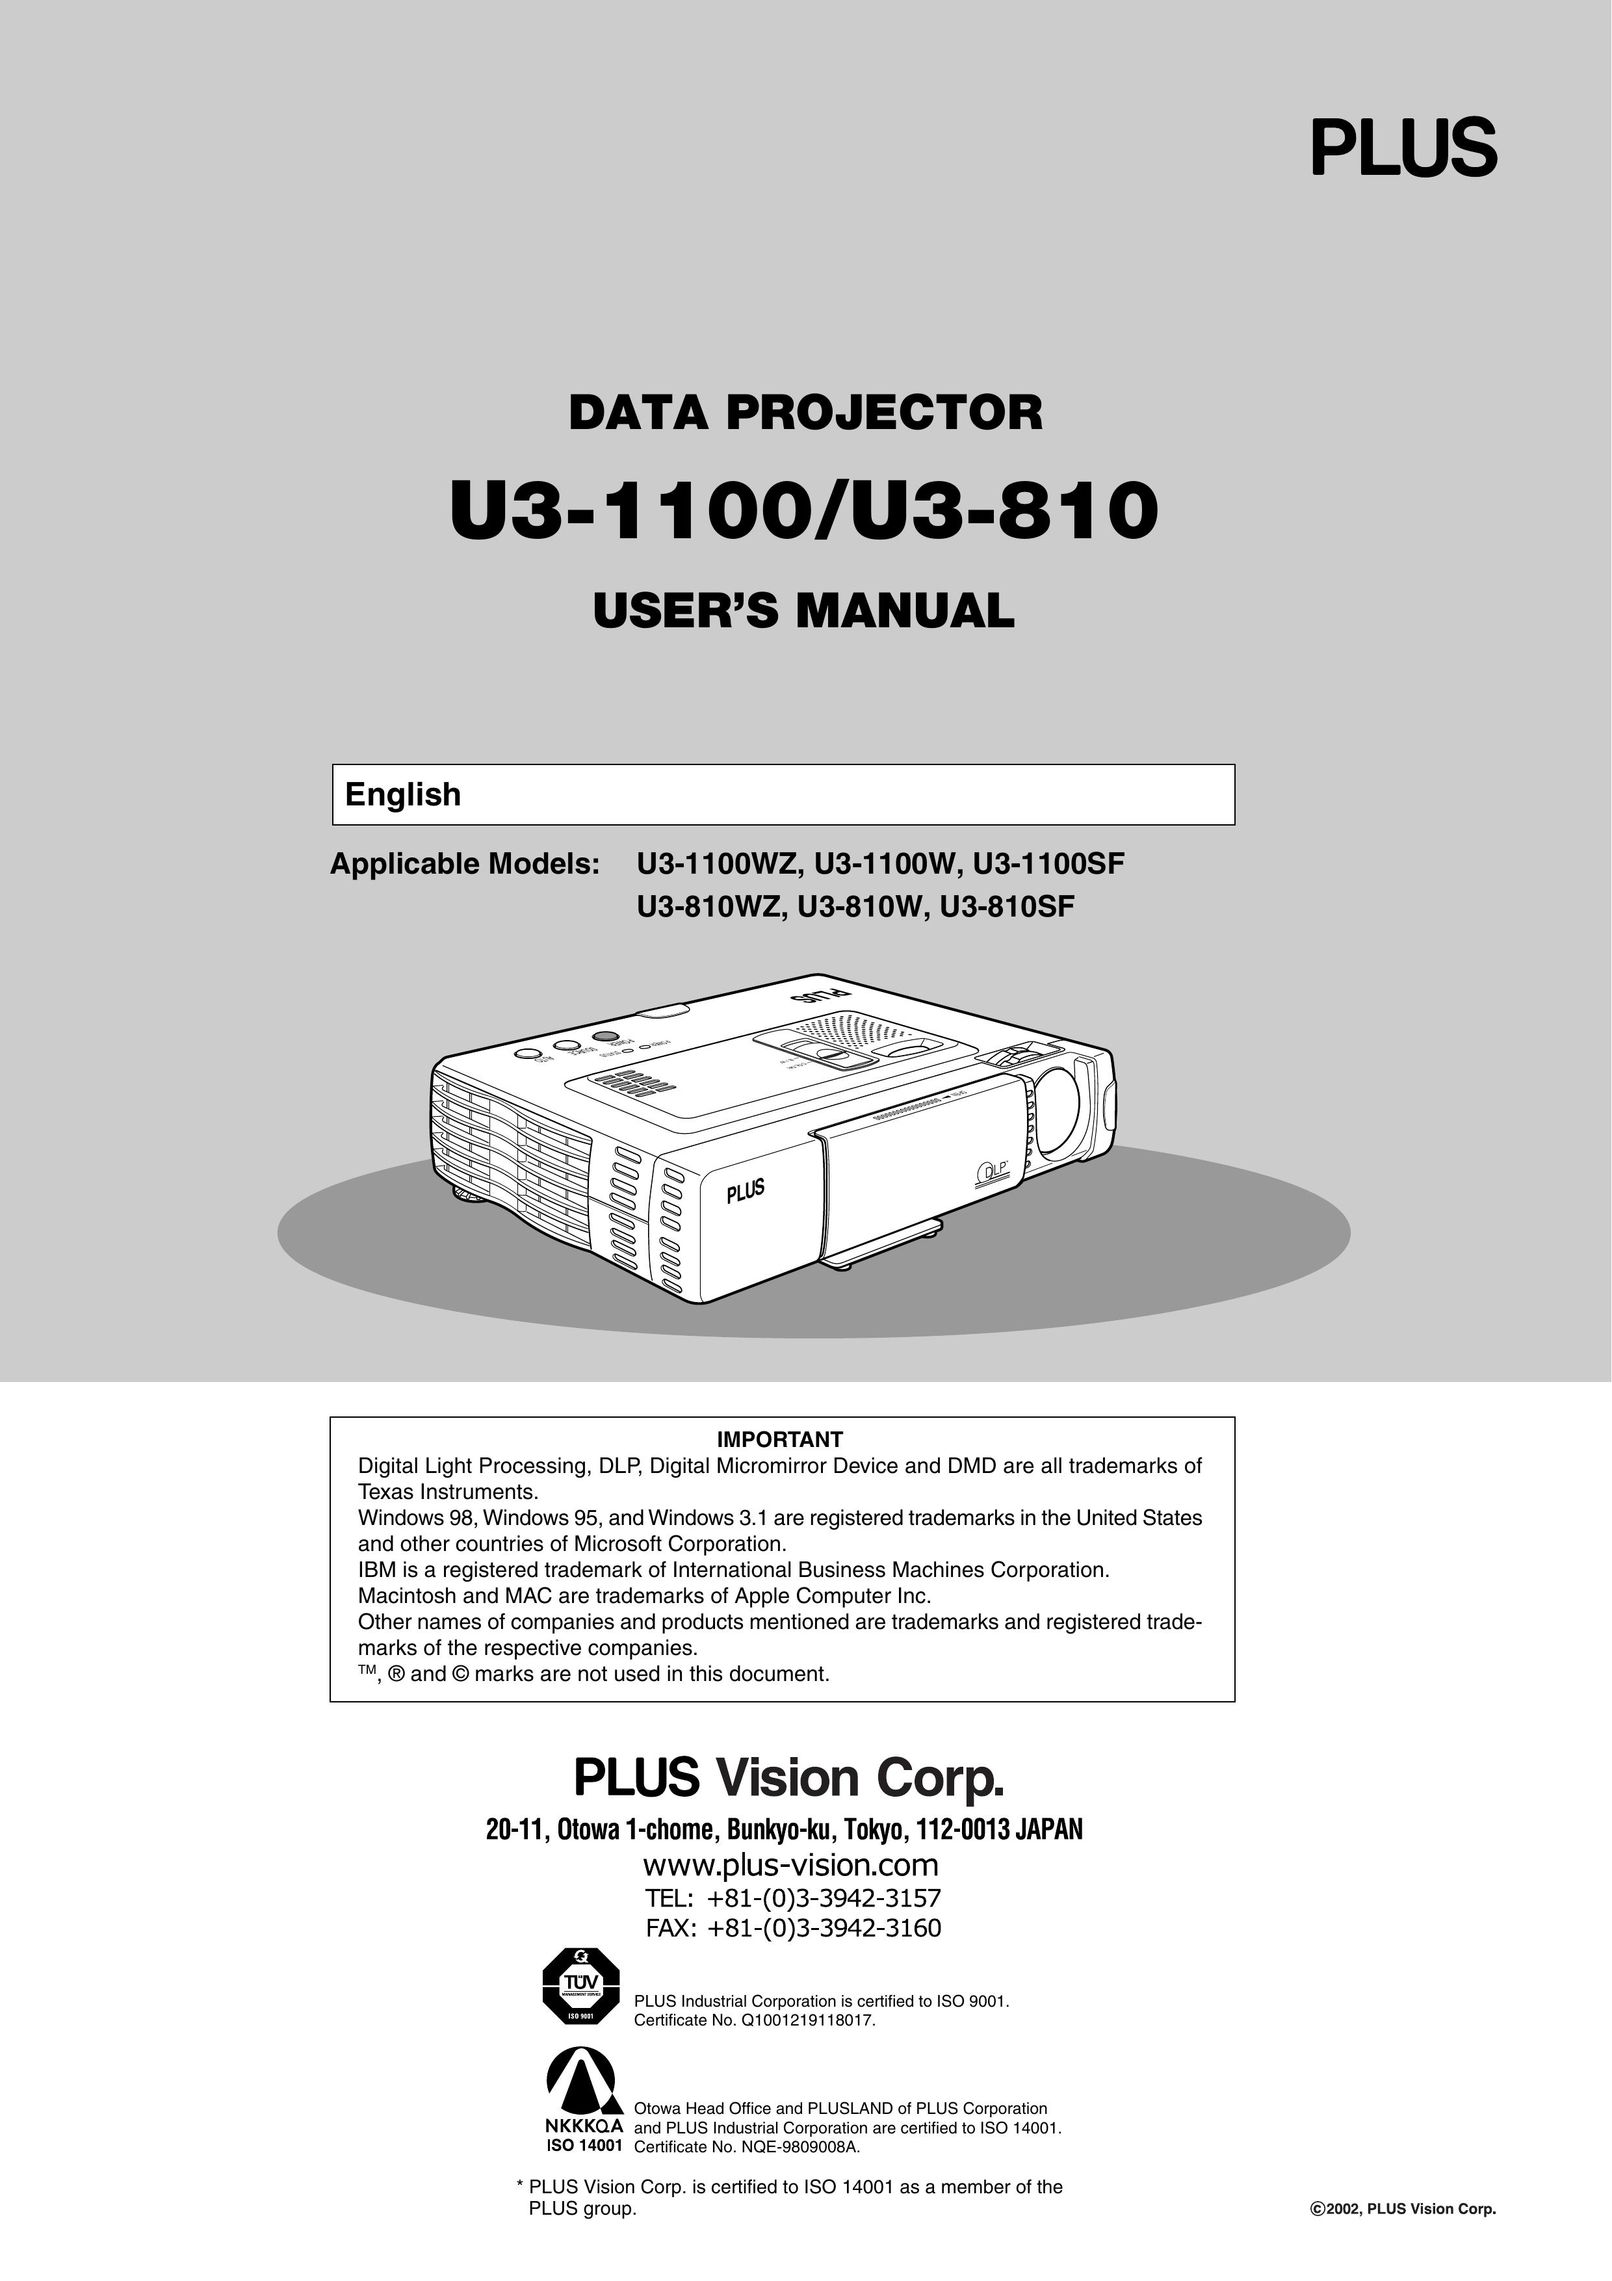 PLUS Vision U3-810WZ Projector User Manual